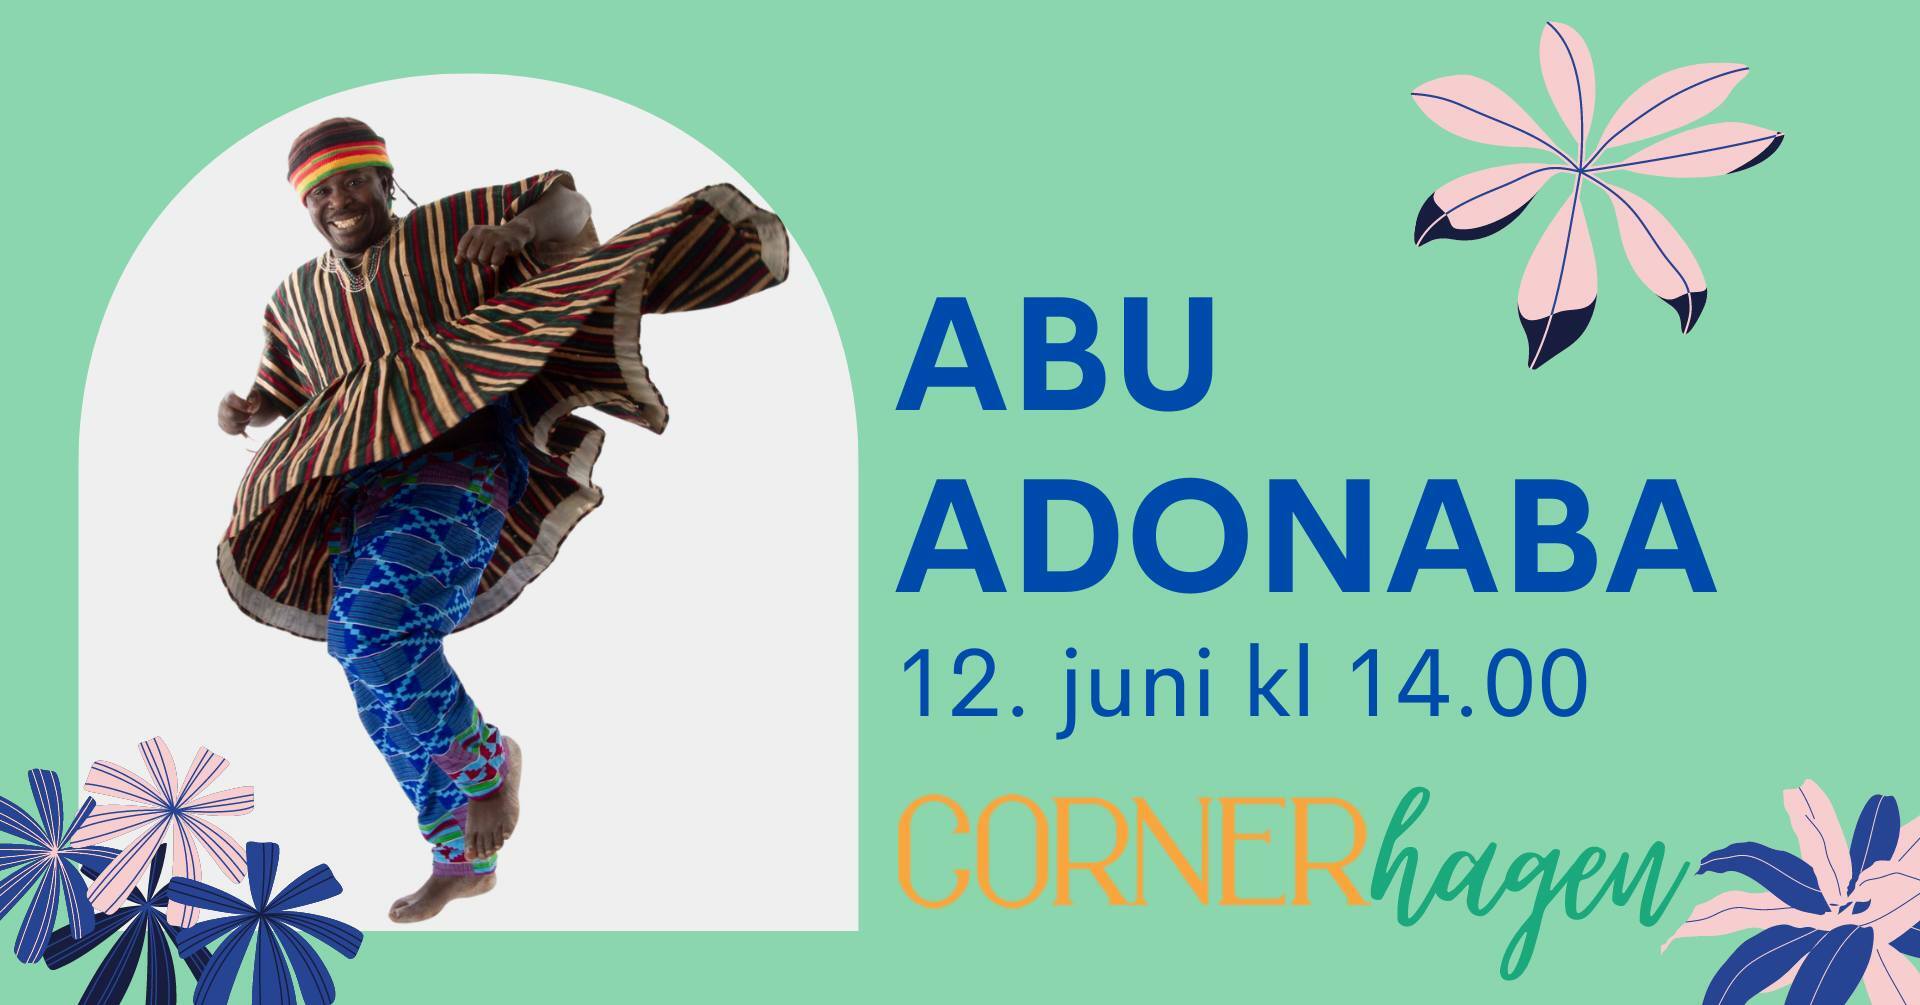 Abu Adonaba i Cornerhagen  - Stas 